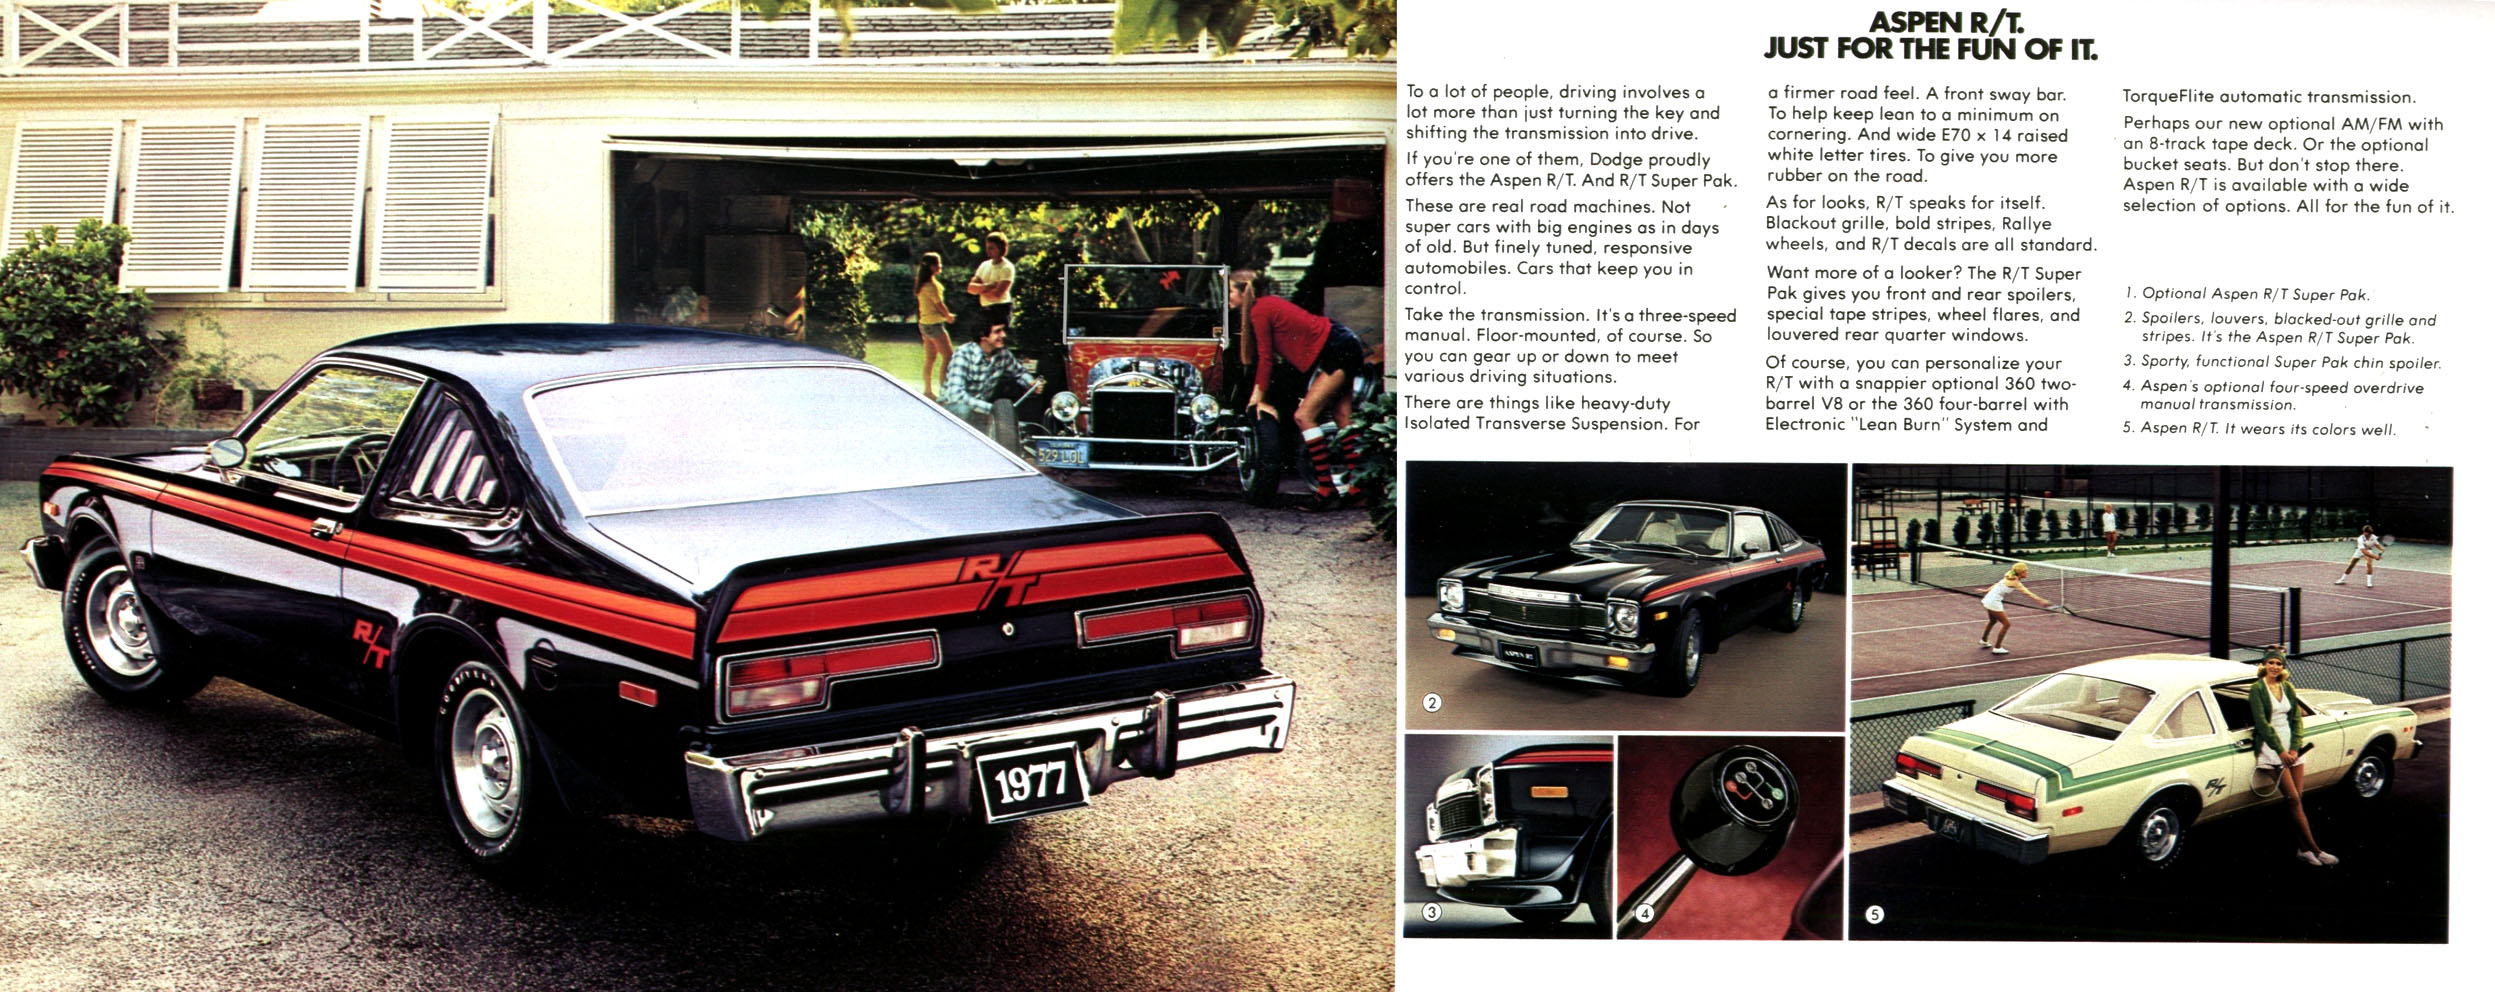 1977 Dodge Aspen Brochure Page 5